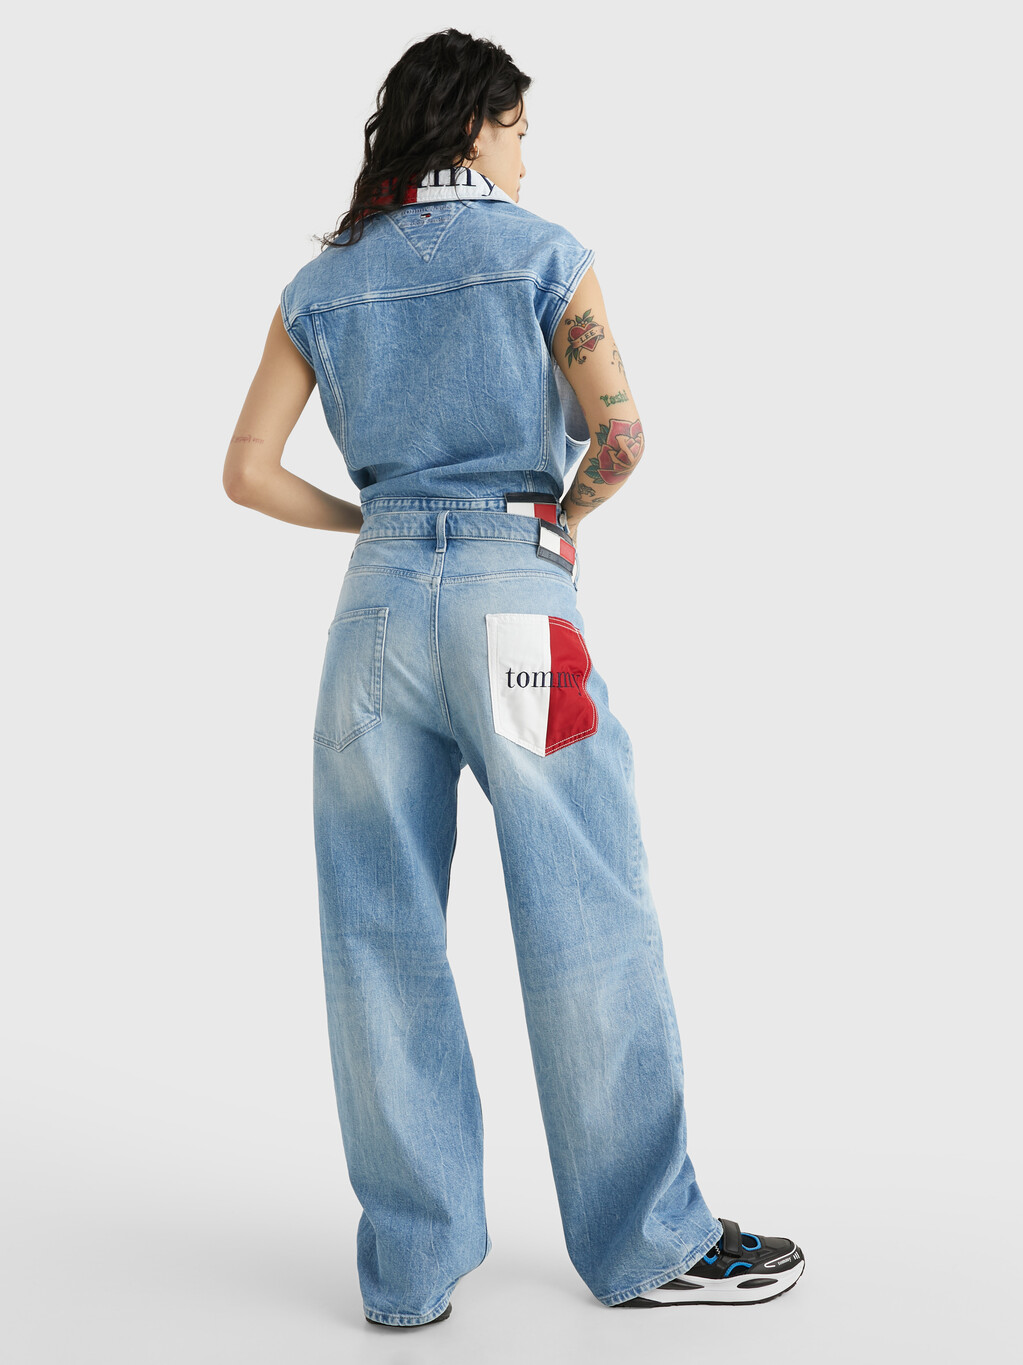 Dual Gender Aiden Baggy Fit Jeans, Denim Indigo, hi-res